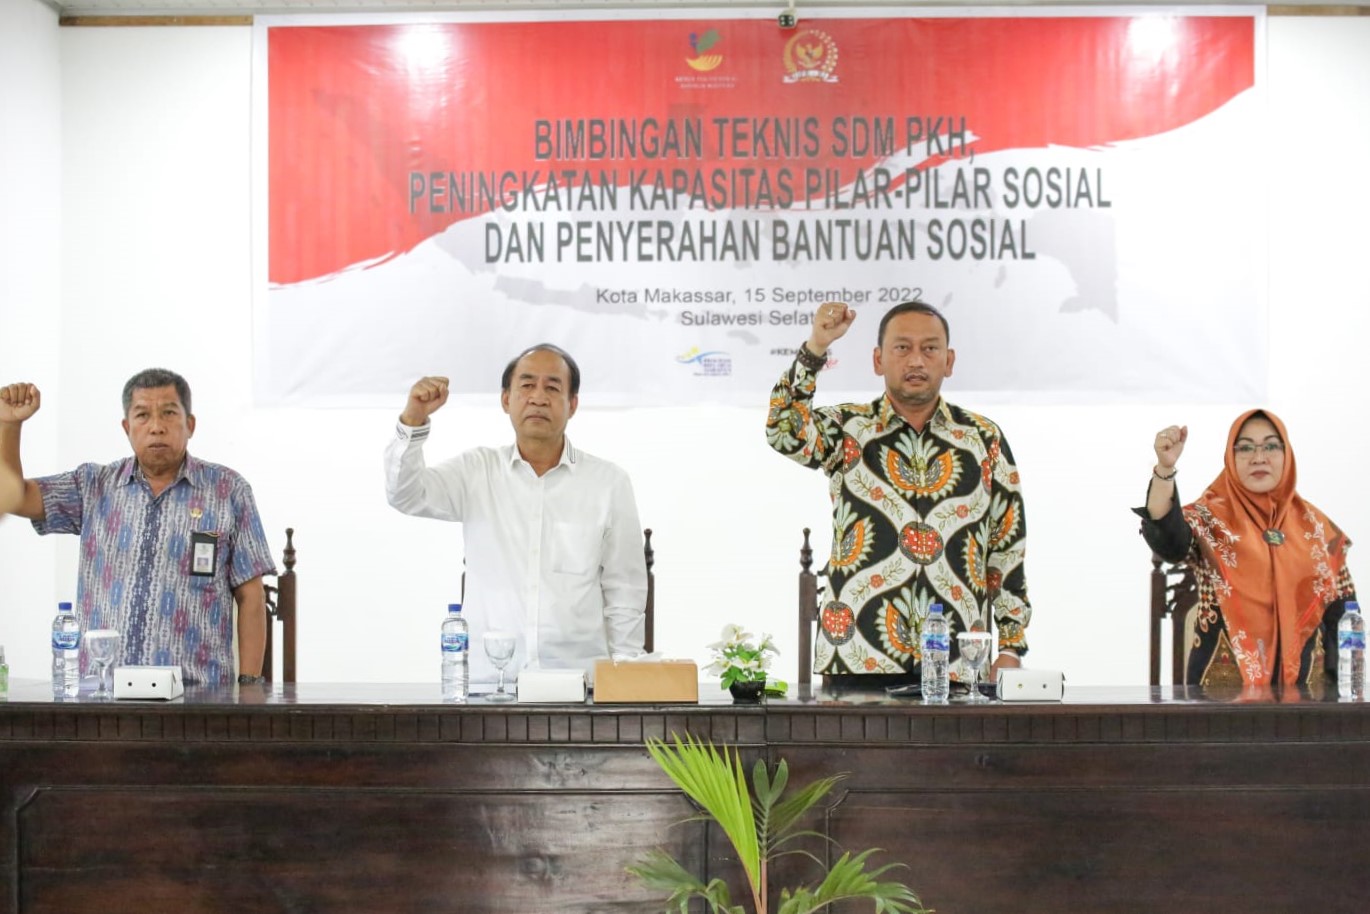 Pelaksanaan Bimtek SDM PKH, Peningkatan Kapasitas Pilar-Pilar Sosial dan Penyerahan Bantuan Sosial di Kota Makassar